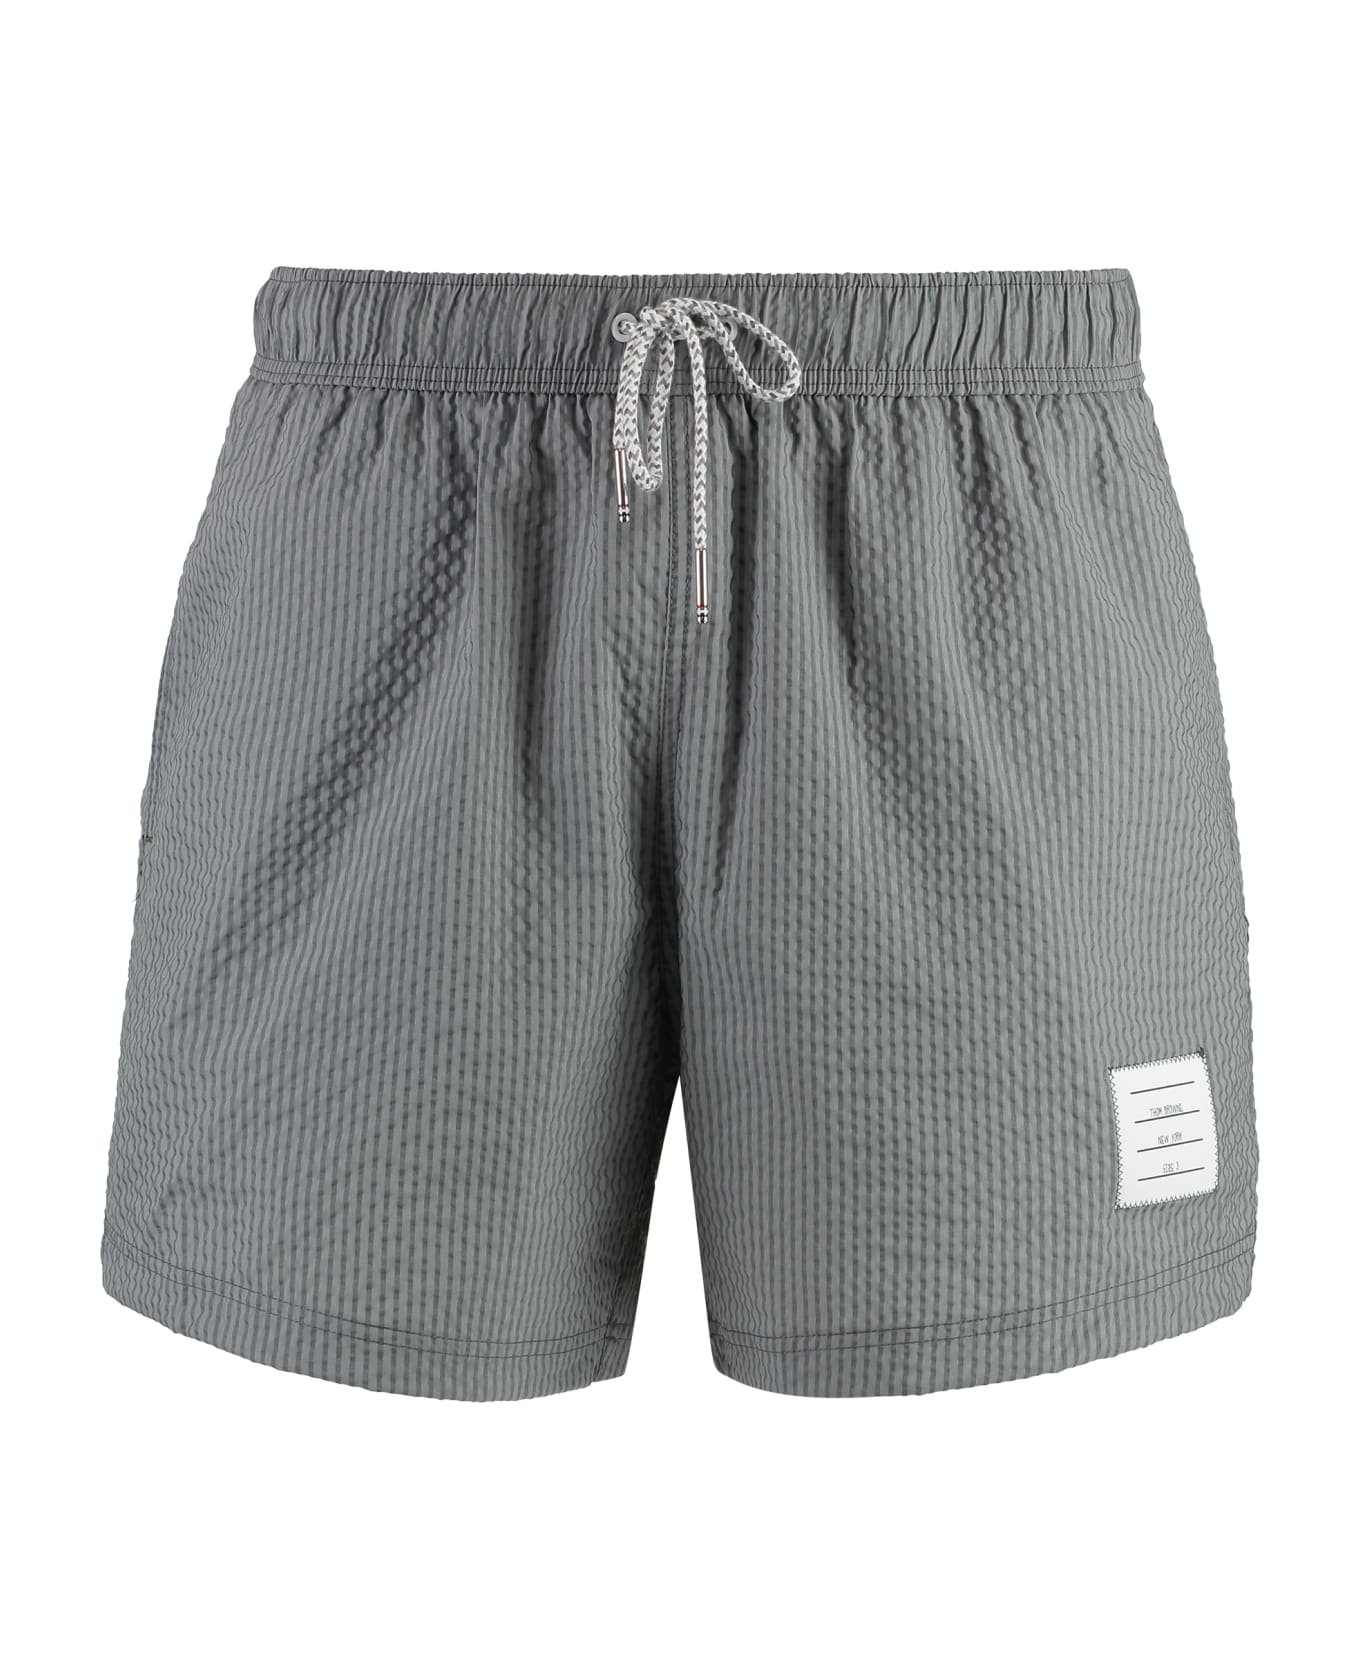 Thom Browne Nylon Swim Shorts - grey